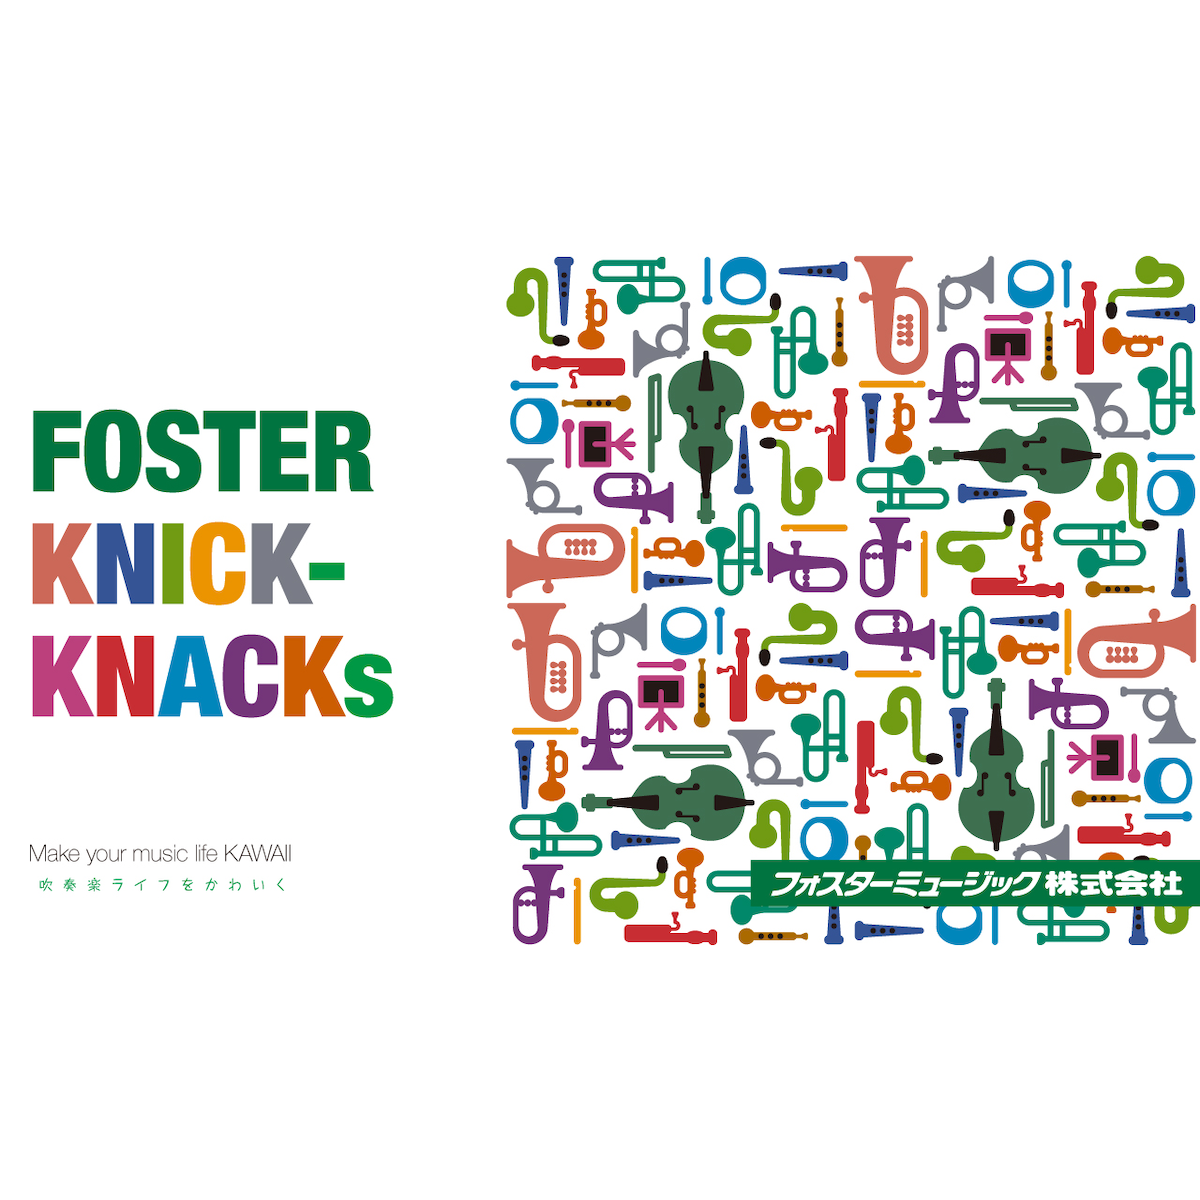 FOSTER KNICK-KNACKs